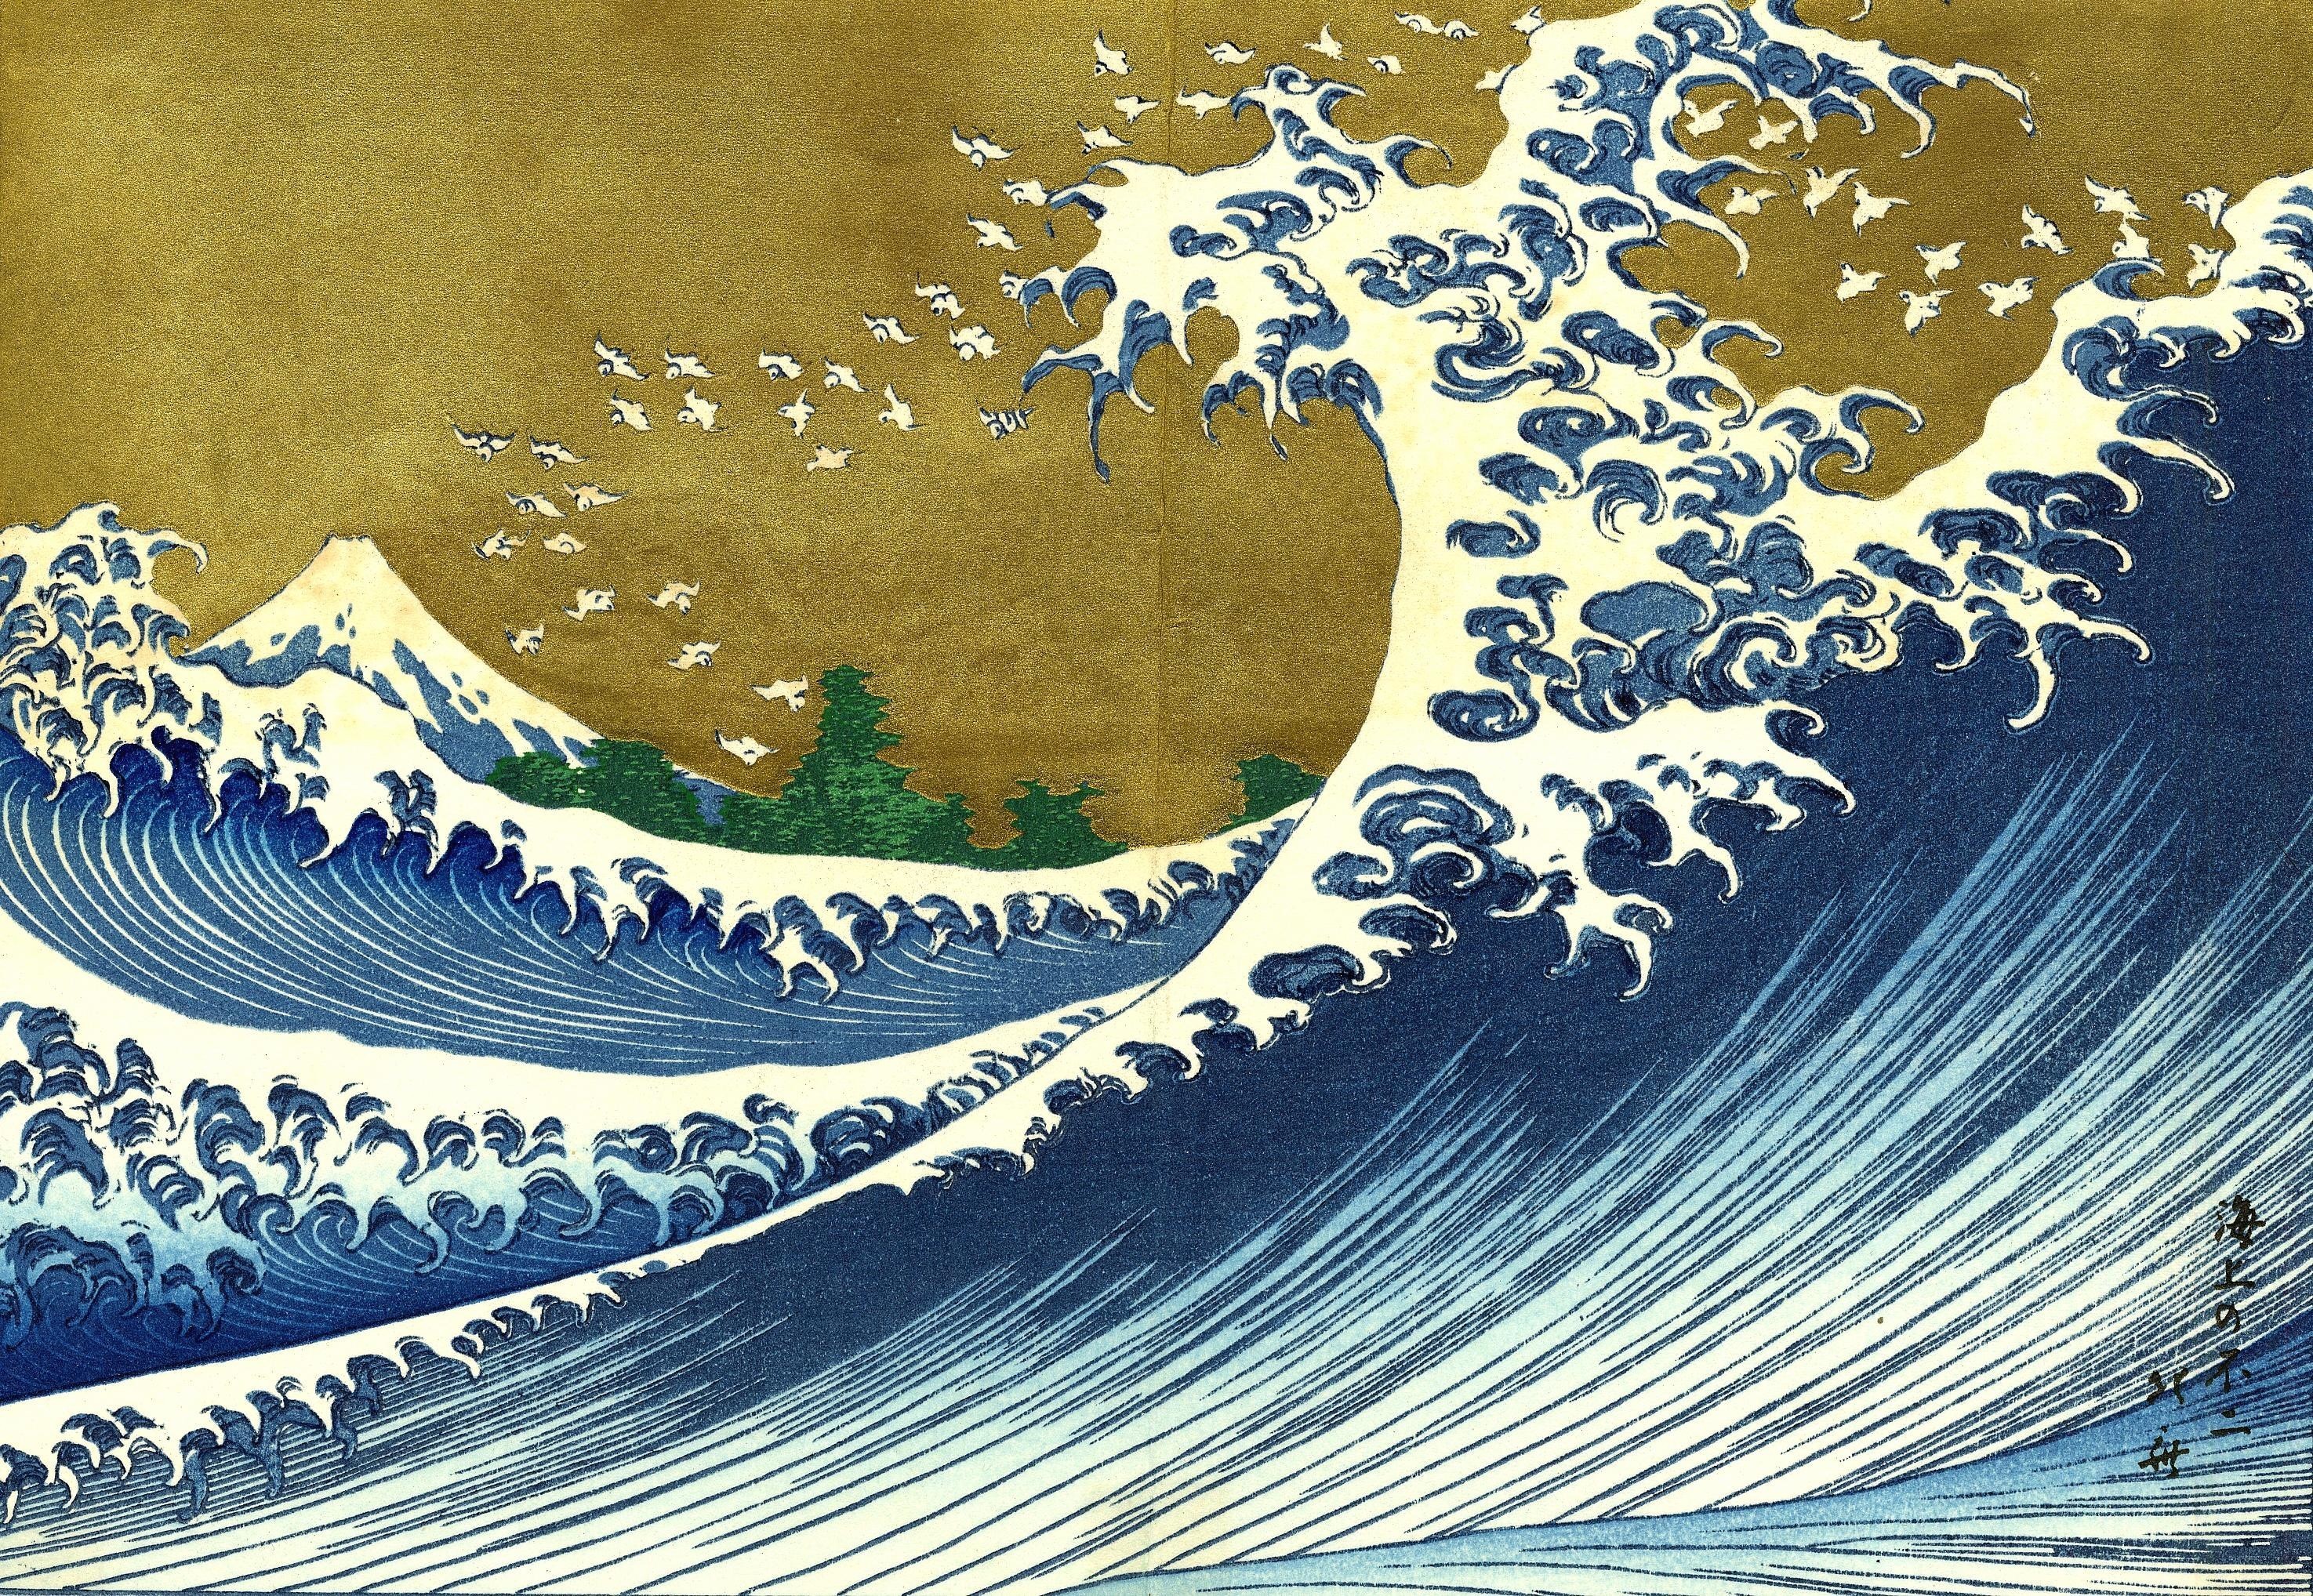 2950x2036  The Great Wave Off Kanagawa Wallpaper Inspirational Tsunami the  Great Wave Off Kanagawa Katsushika Hokusai